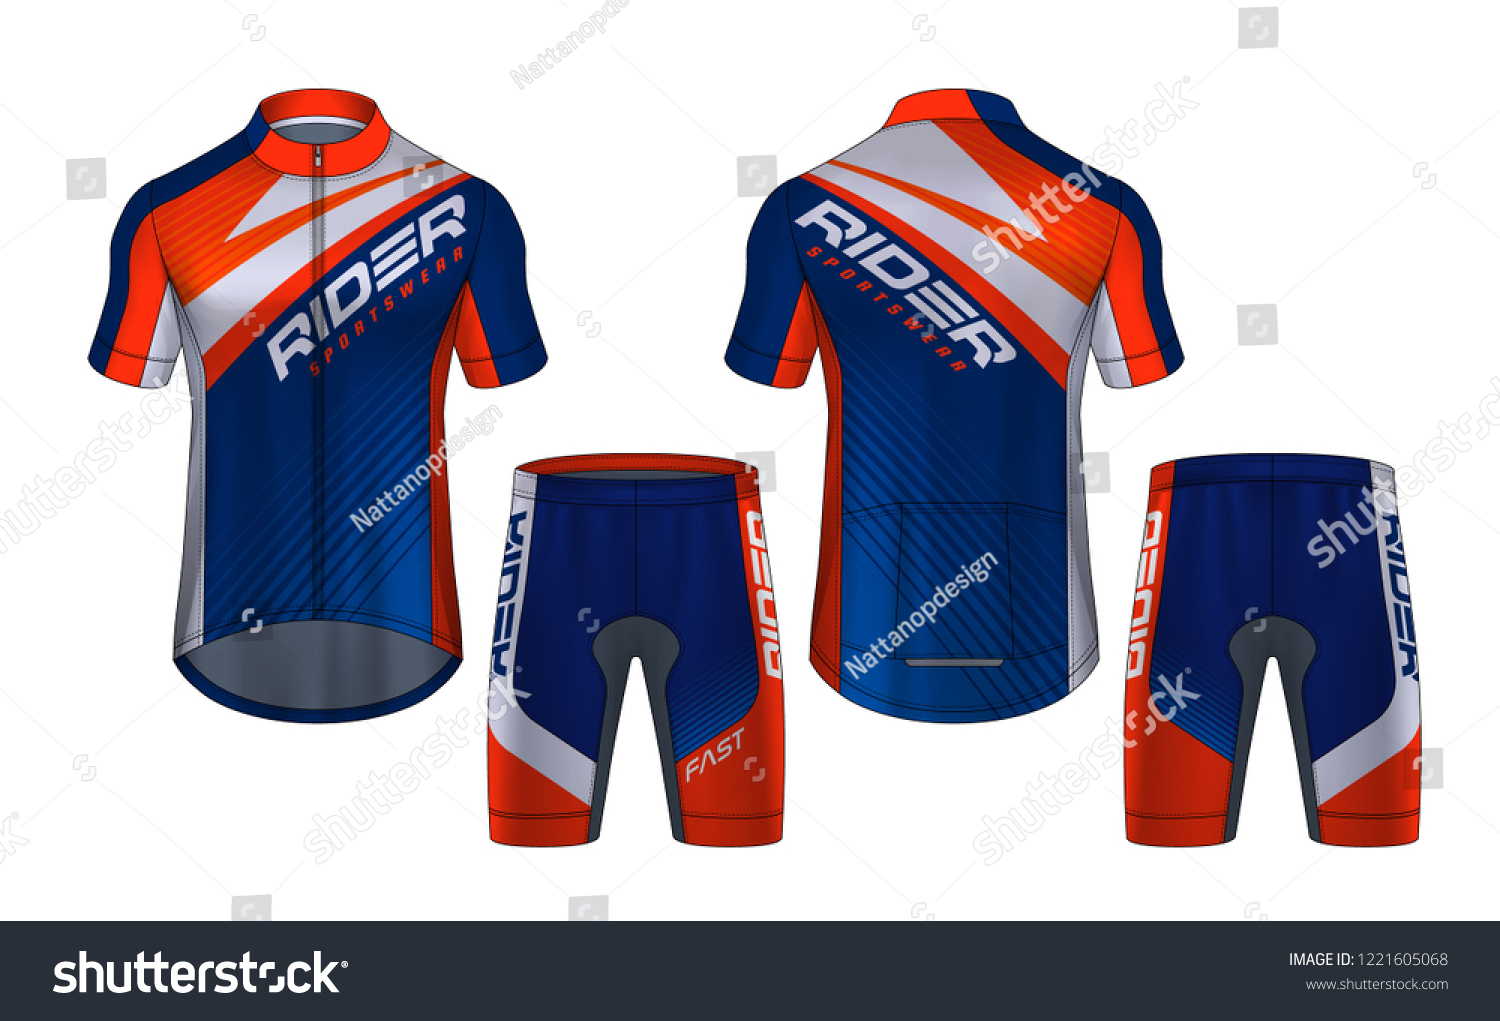 Cycling Jerseys Mockuptshirt Sport Design Templateuniform Stock Vector Royalty Free 1221605068